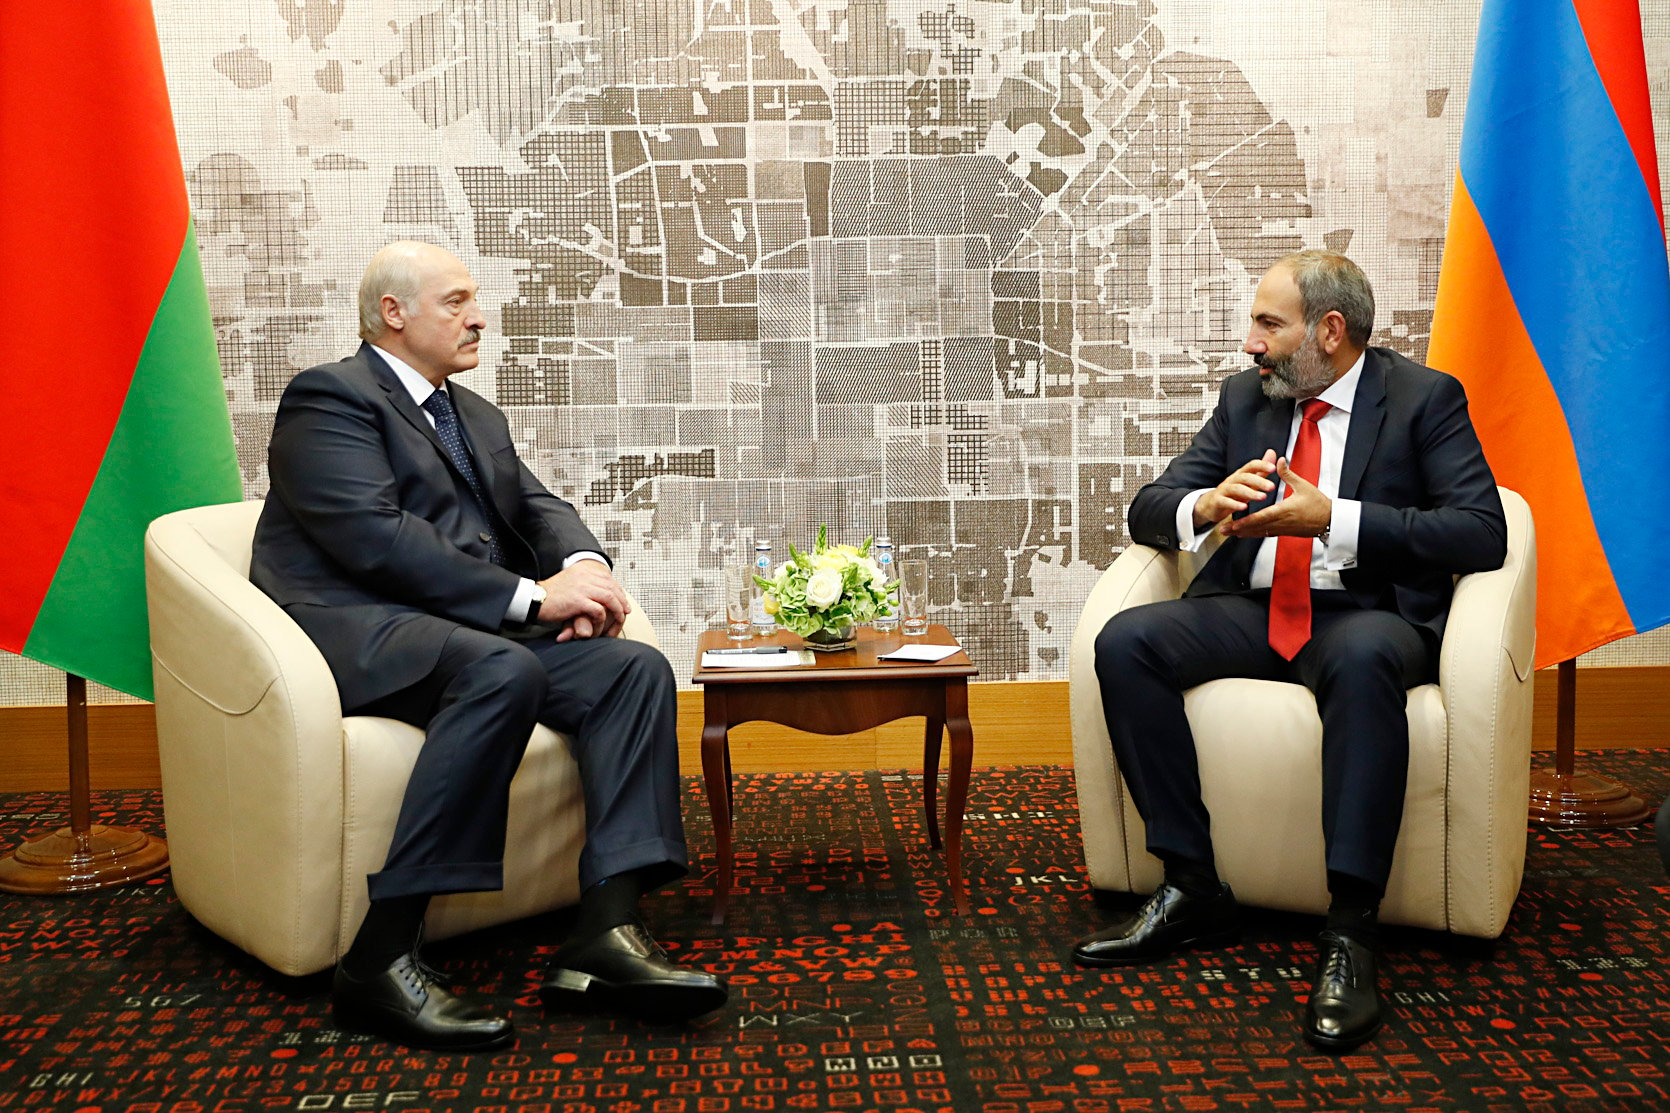 Nikol Pashinyan and Alexander Lukashenko look forward to deepening and further developing Armenian-Belarusian ties